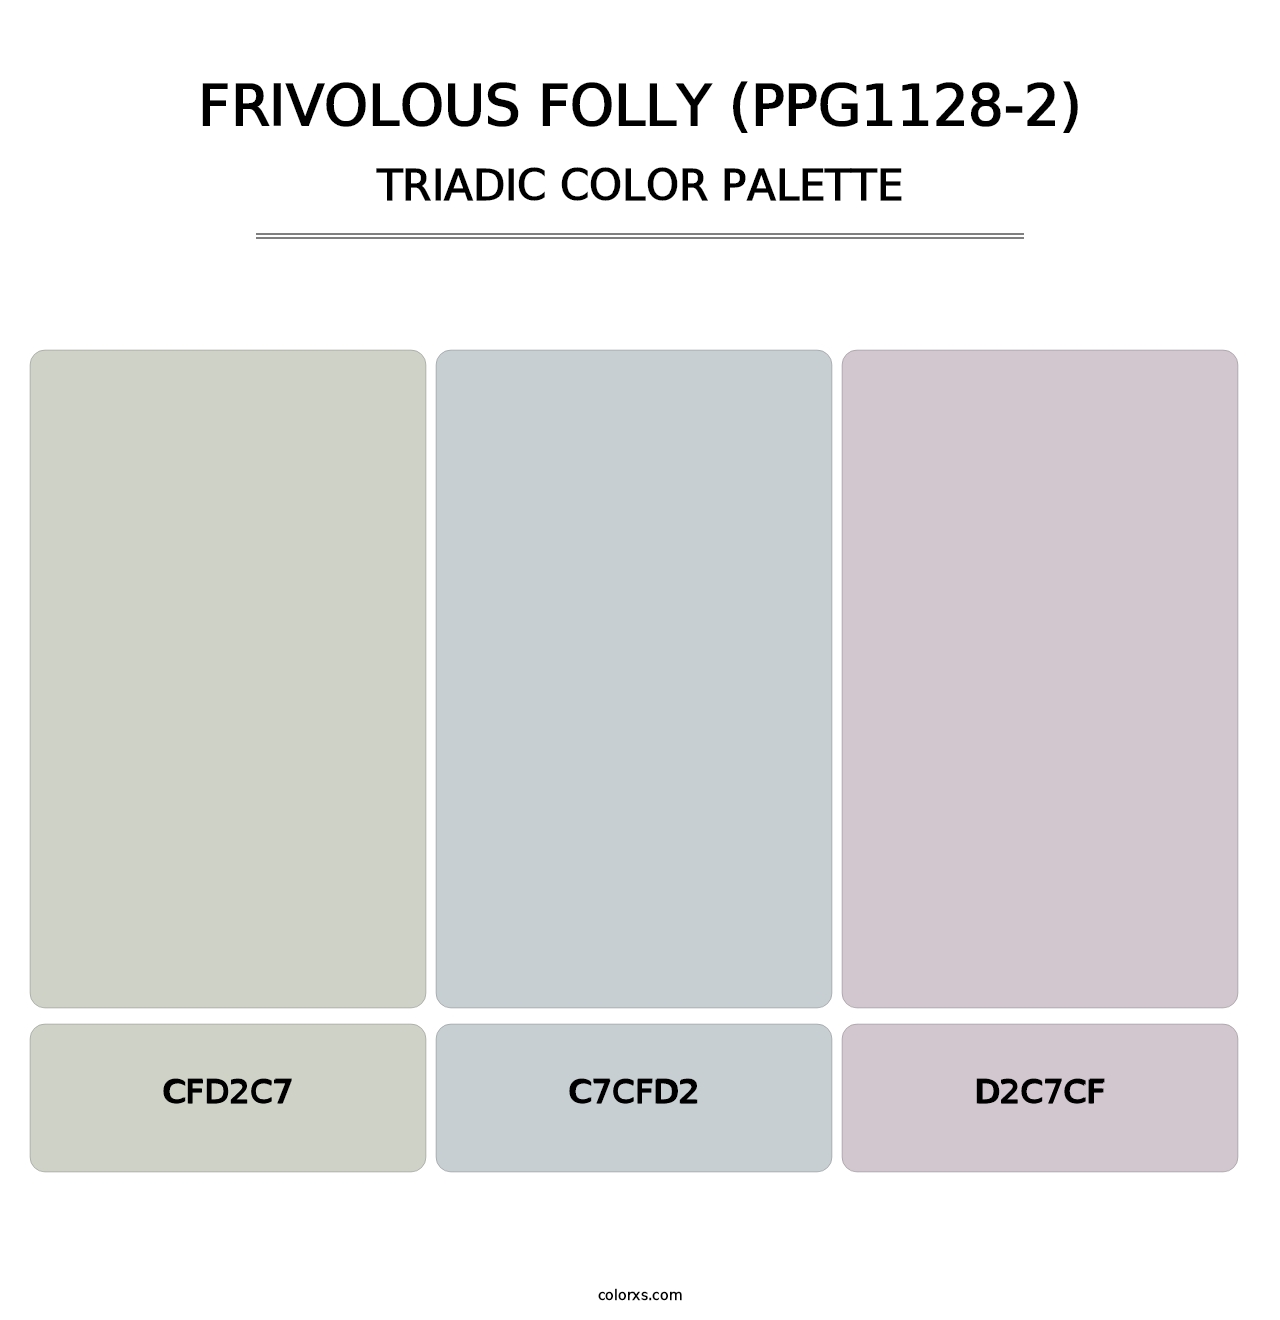 Frivolous Folly (PPG1128-2) - Triadic Color Palette